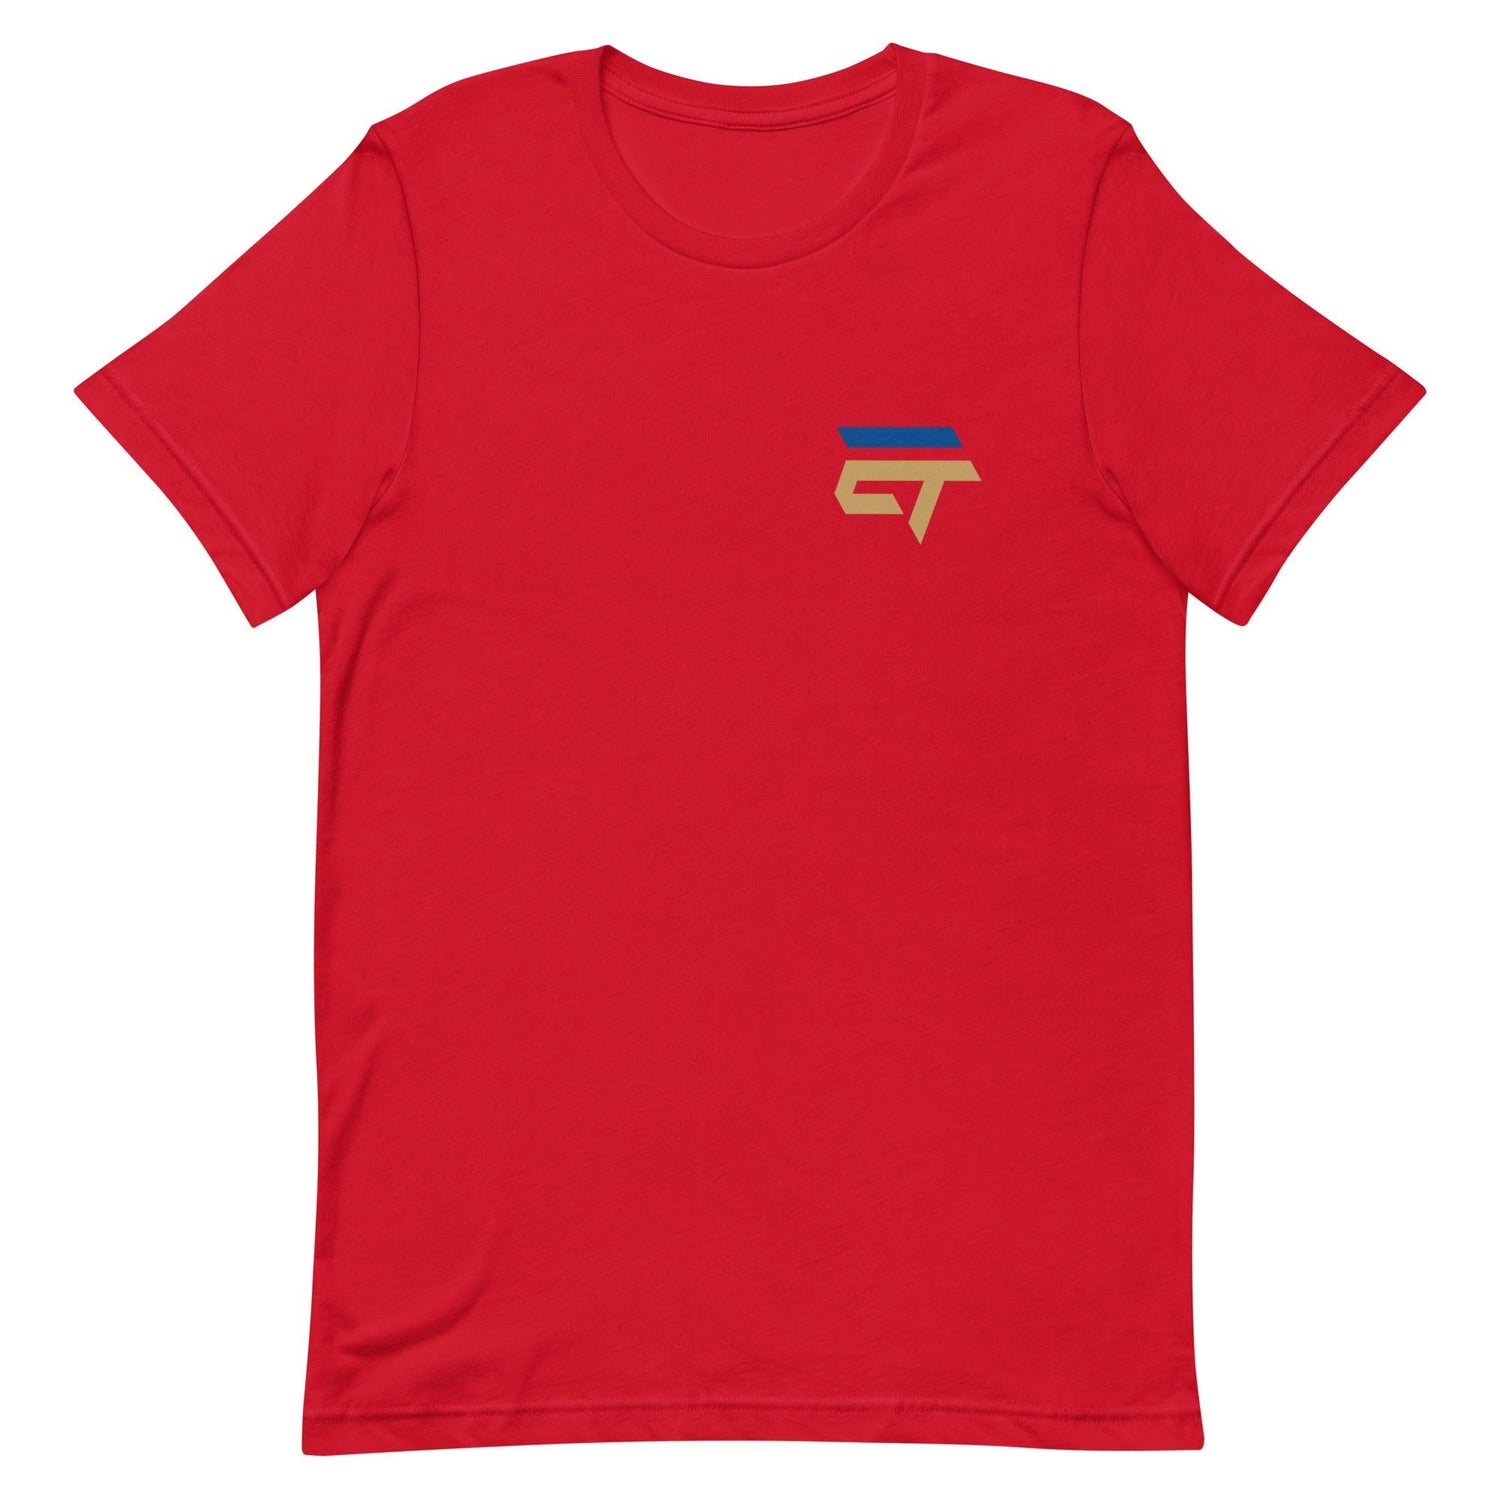 Erick Torres "Essential" t-shirt - Fan Arch